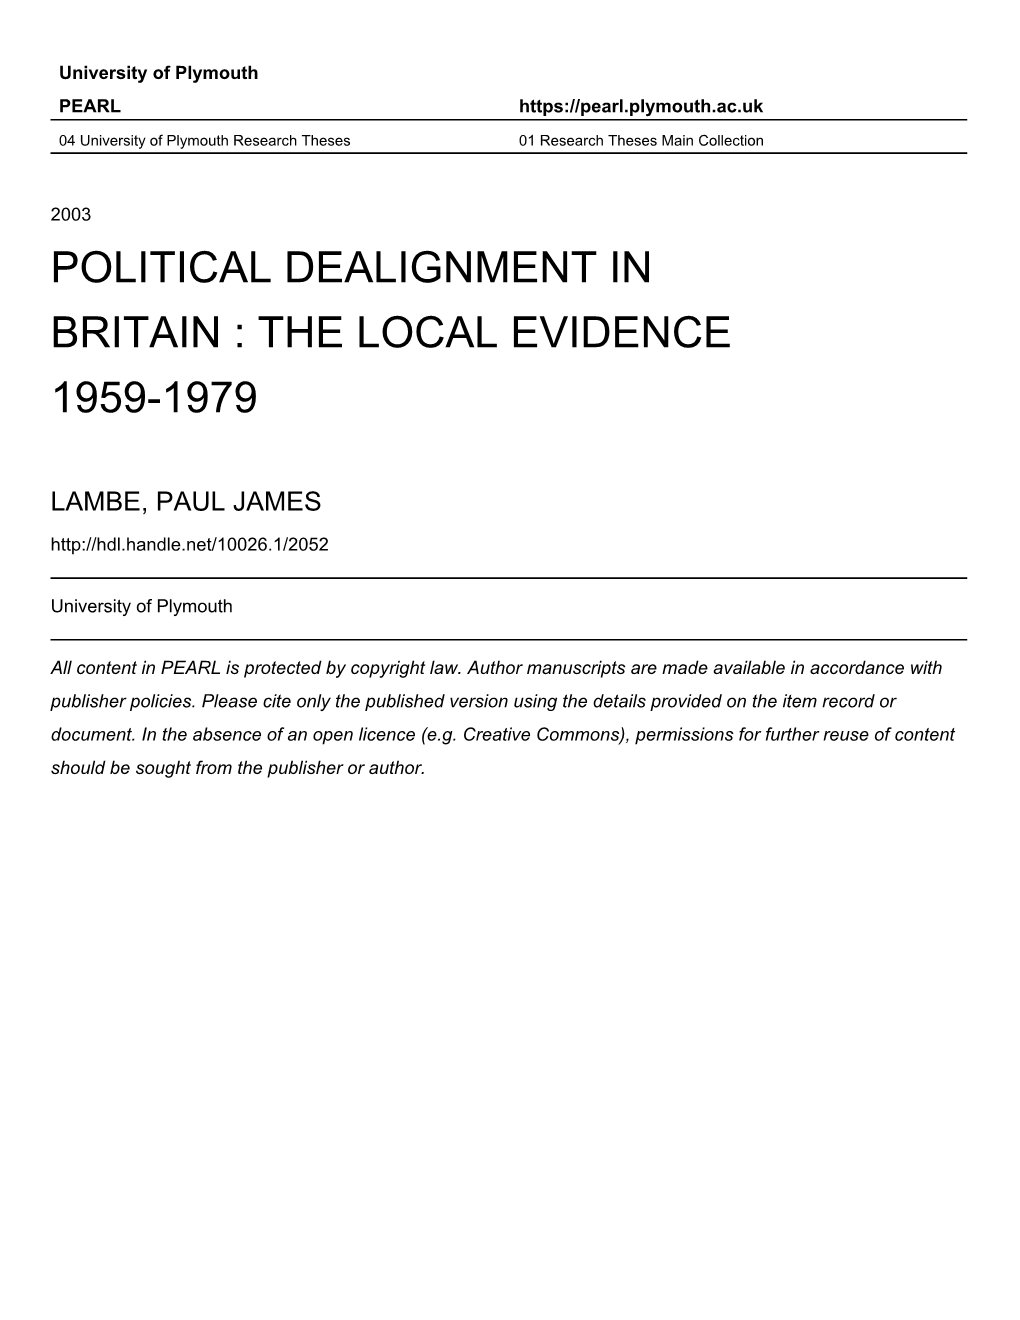 POLITICAL Dealfgnivlent in BRITAIN : Tfle LOCAL EVTOENCE 1959-1979